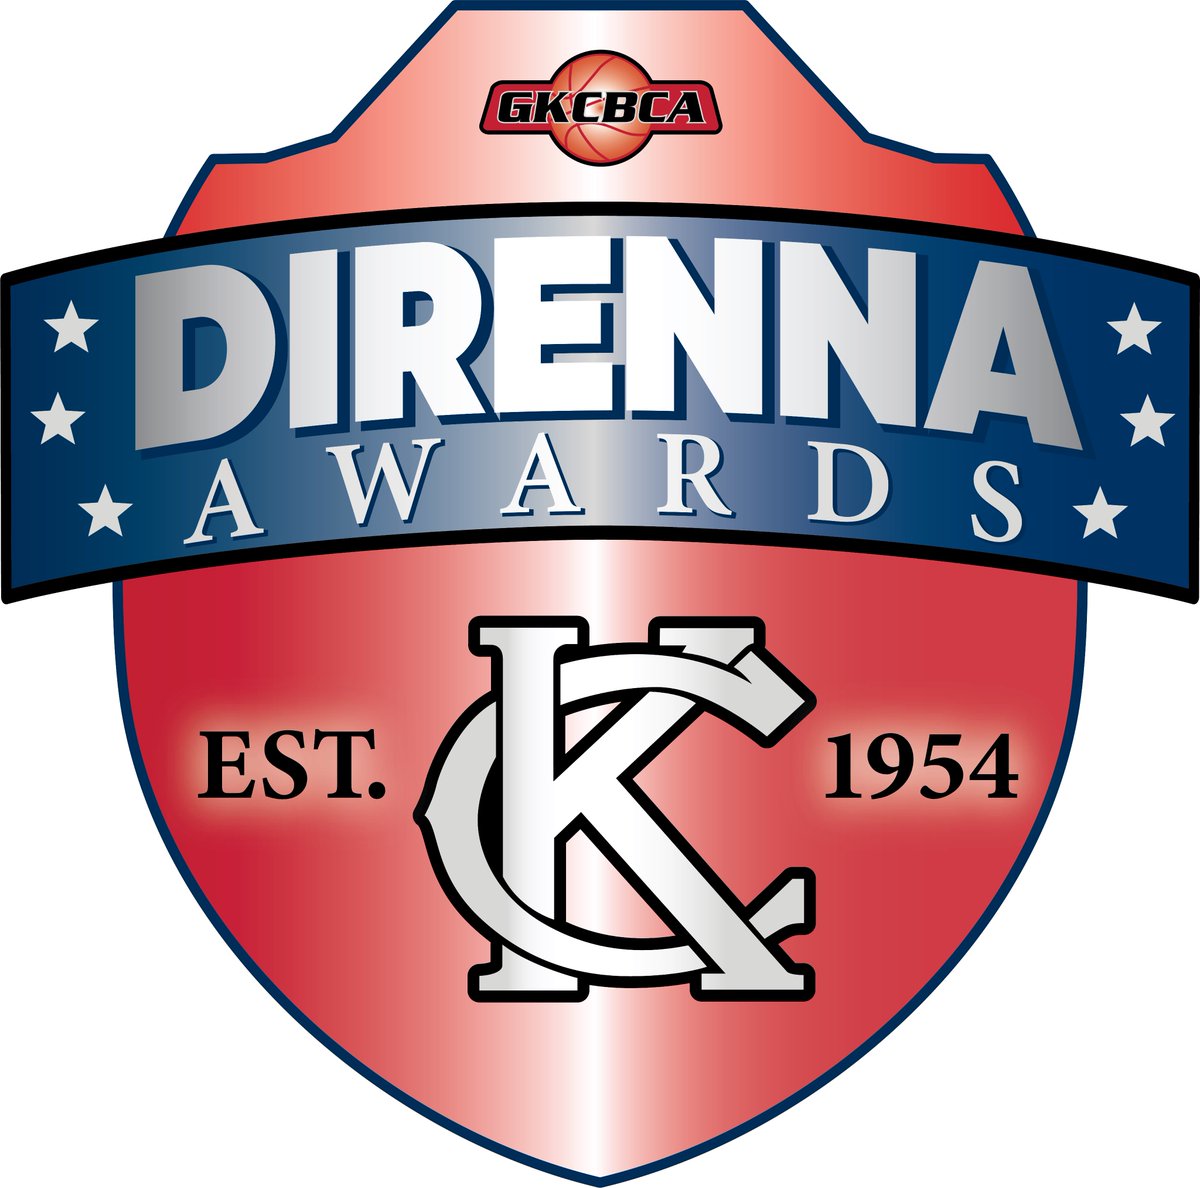 Media alert: The 2022 DiRenna Finalists have been announced, bit.ly/37jLRdi